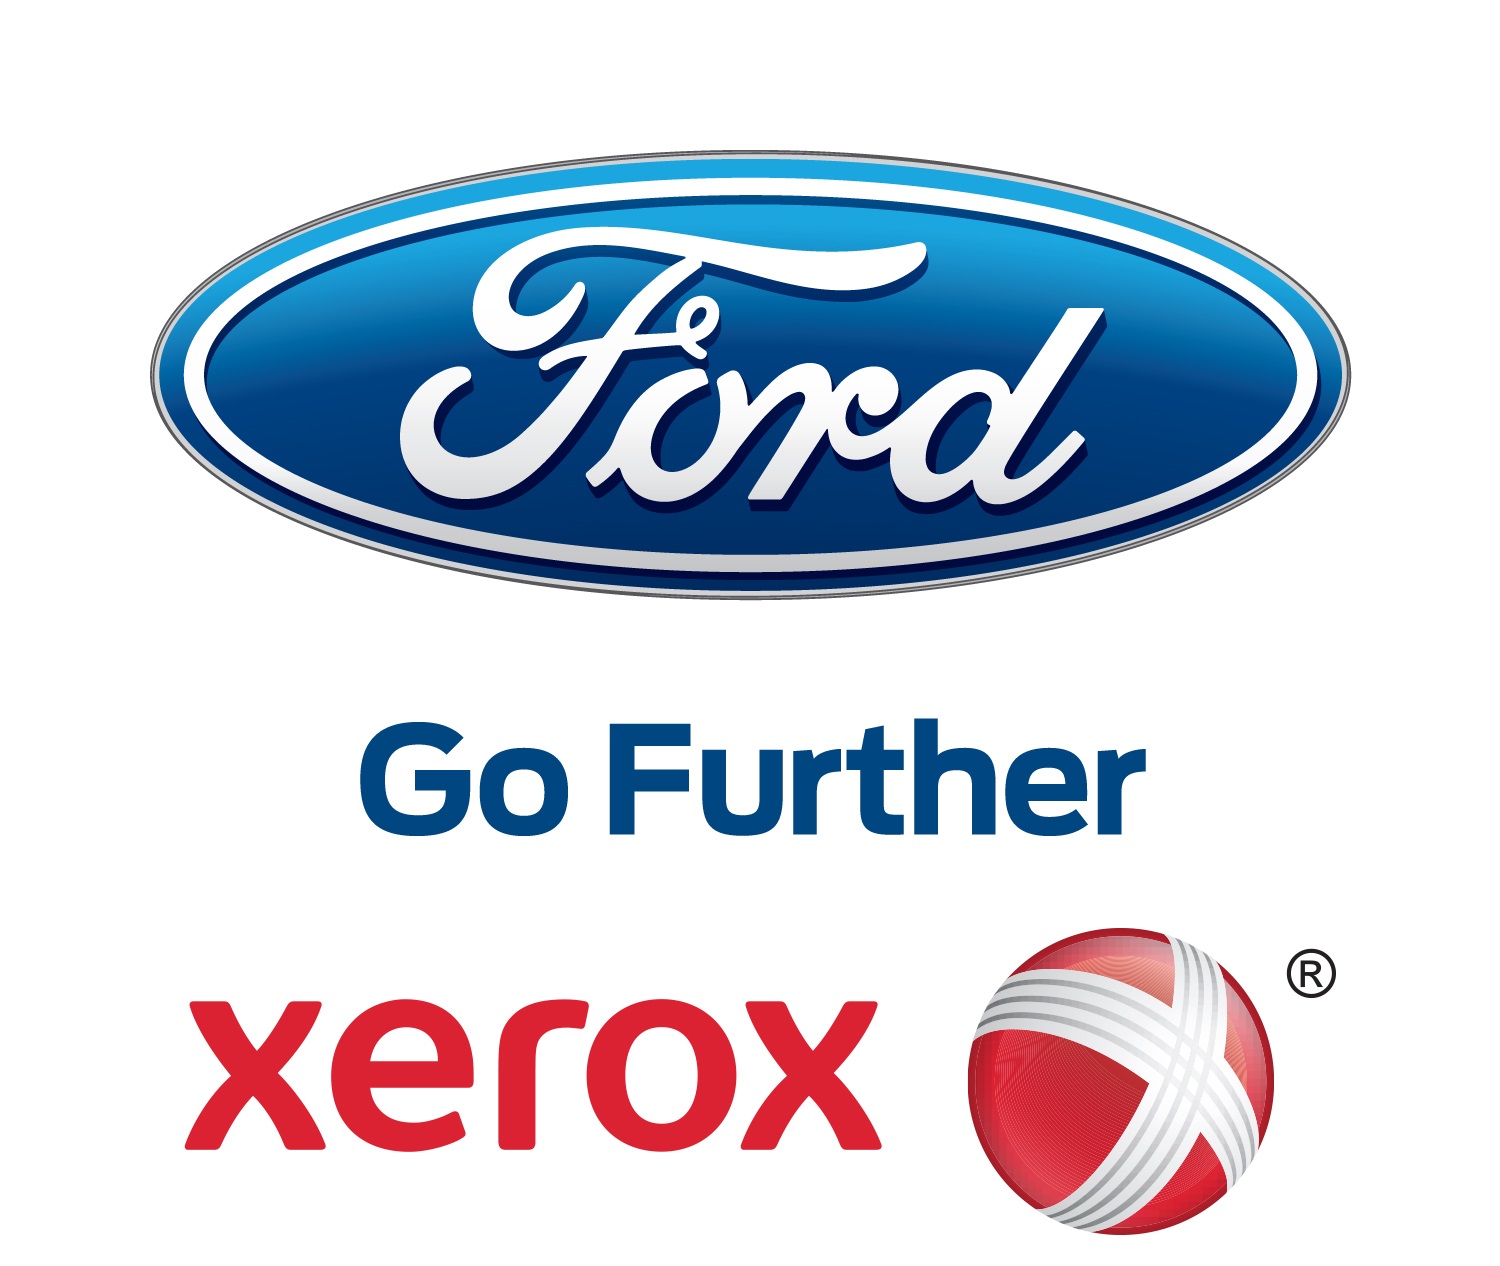 2016 Annual Enrollment Ford eGuide Redesign - Logo - https://s39939.pcdn.co/wp-content/uploads/2018/02/Xerox-Combo_logo.jpg